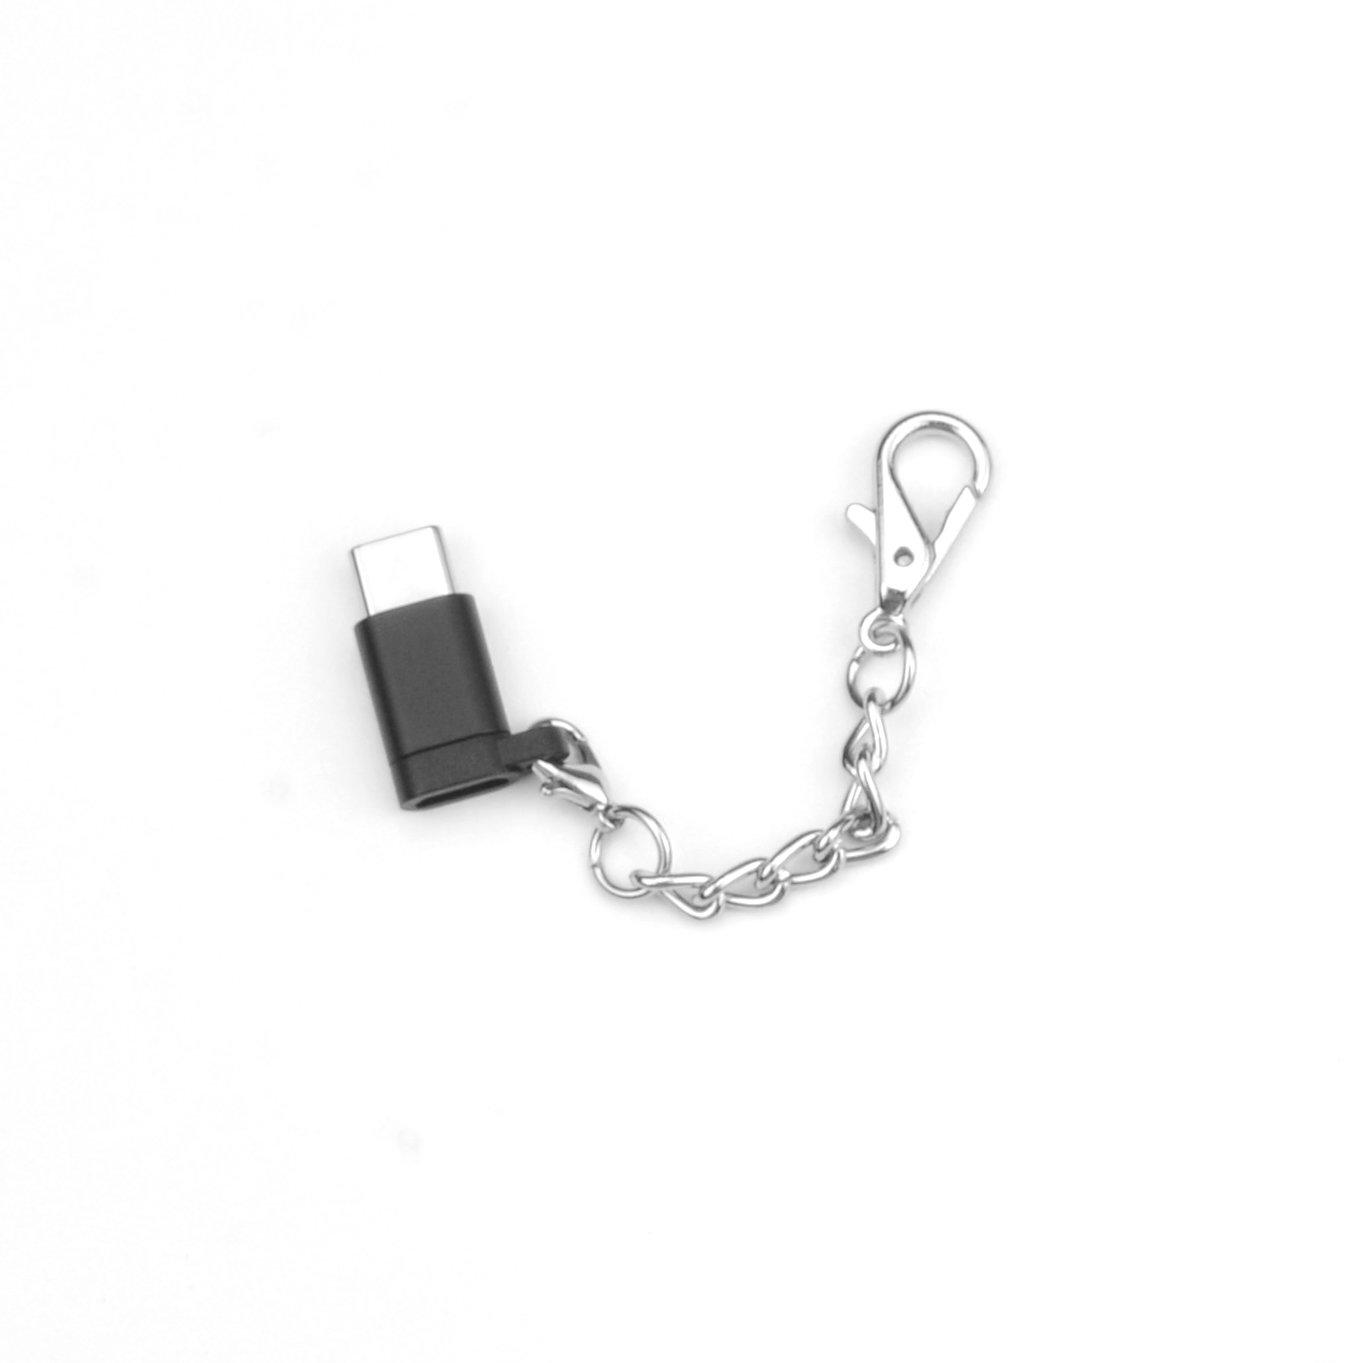 INF Micro USB zu Konverter USB-C